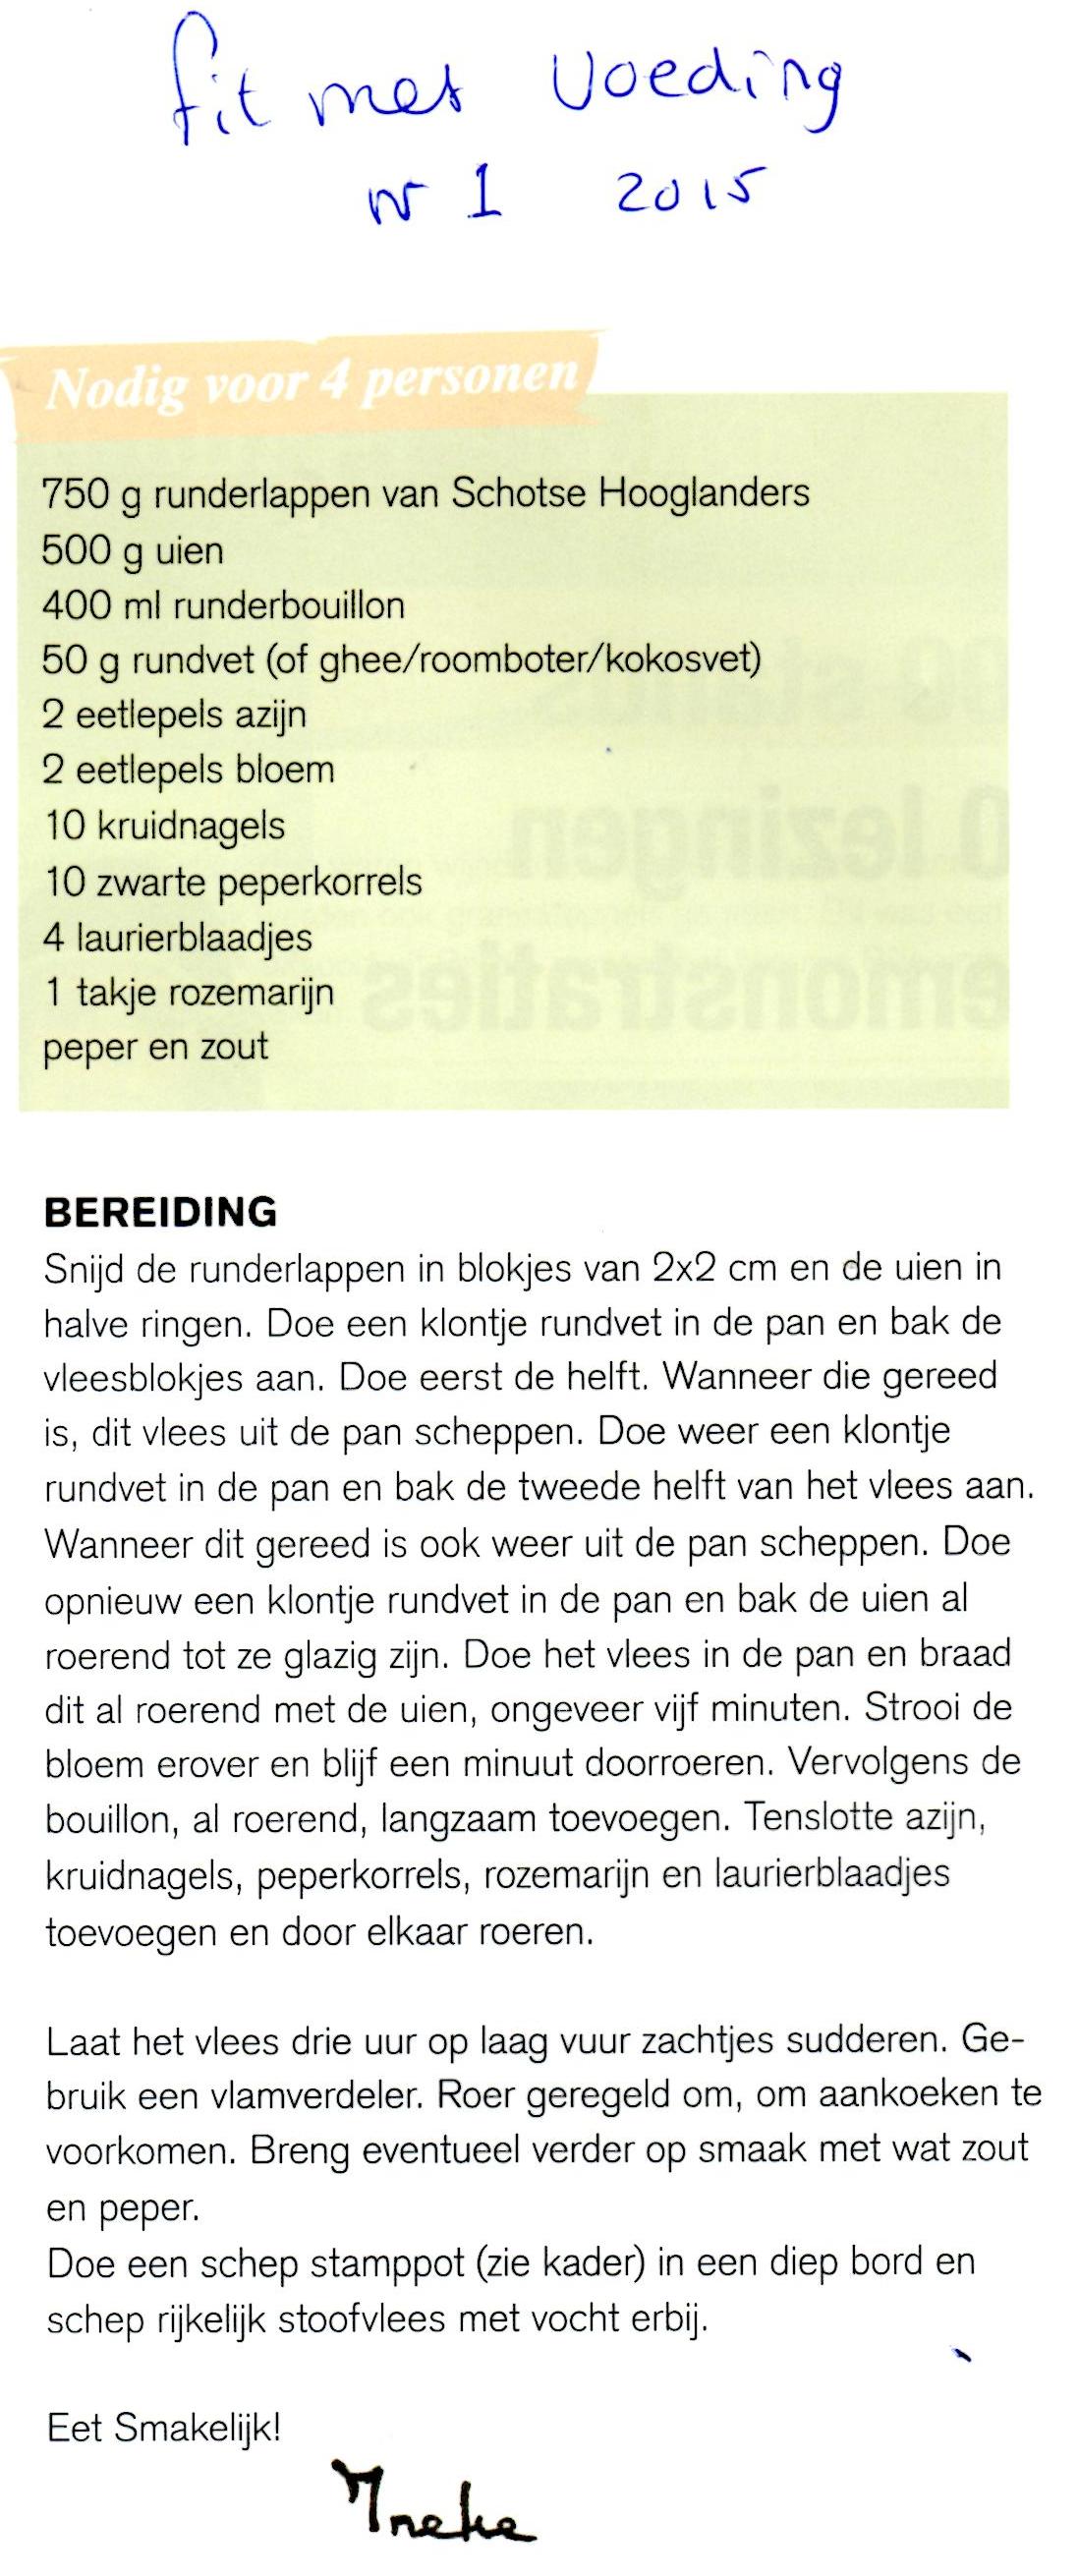 artikel magazine fit met voeding ineke haisma - recept